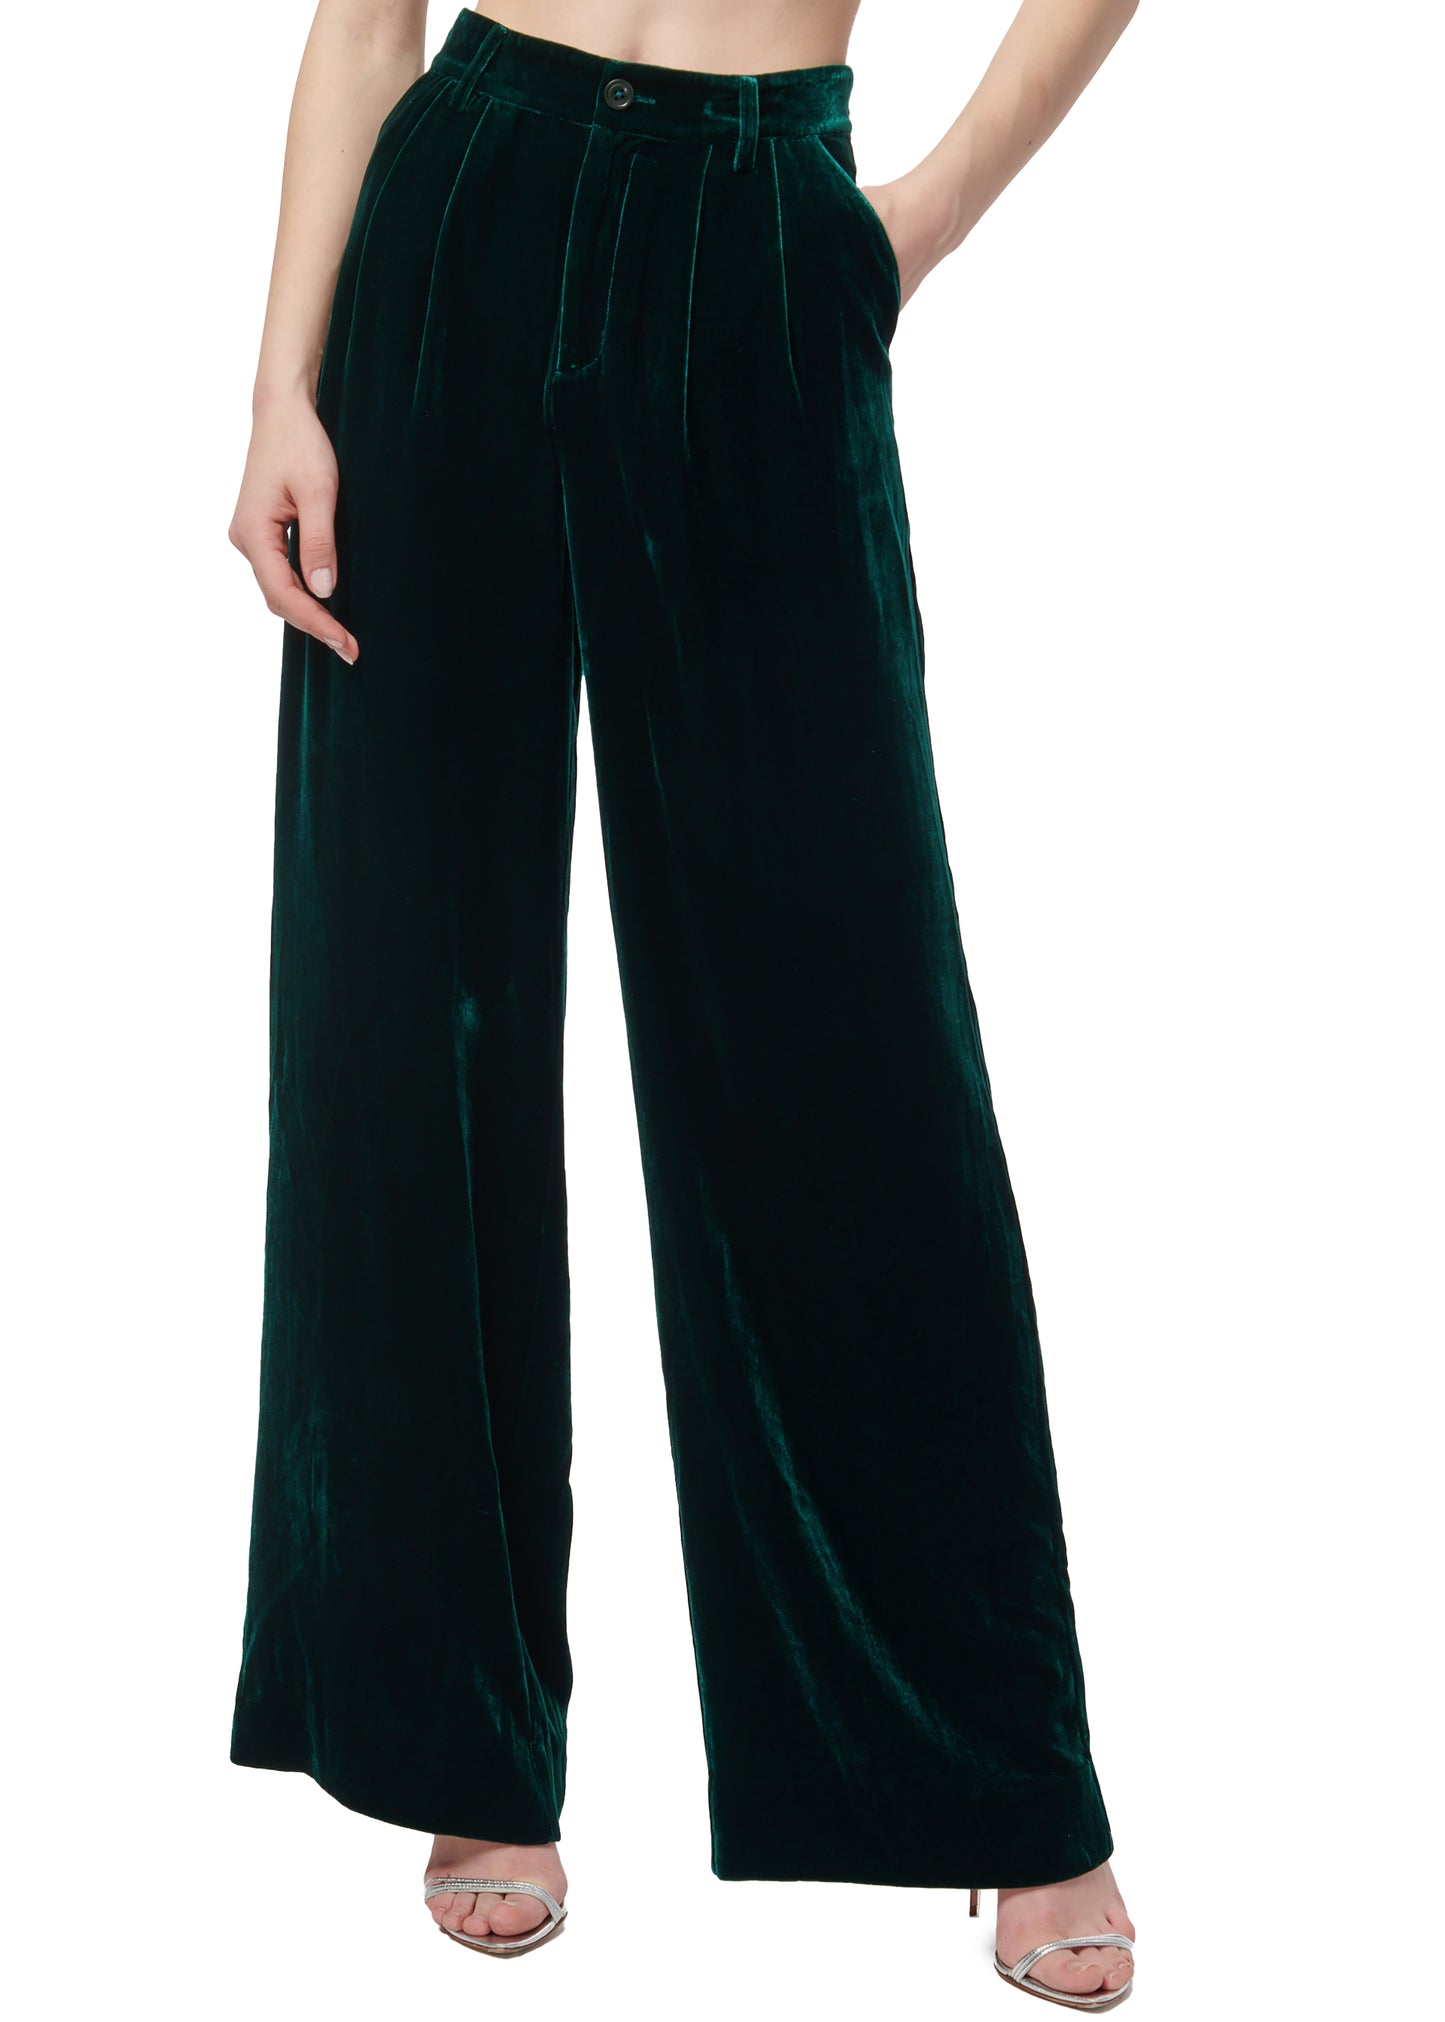 Cami NYC Rylie Velvet Pants